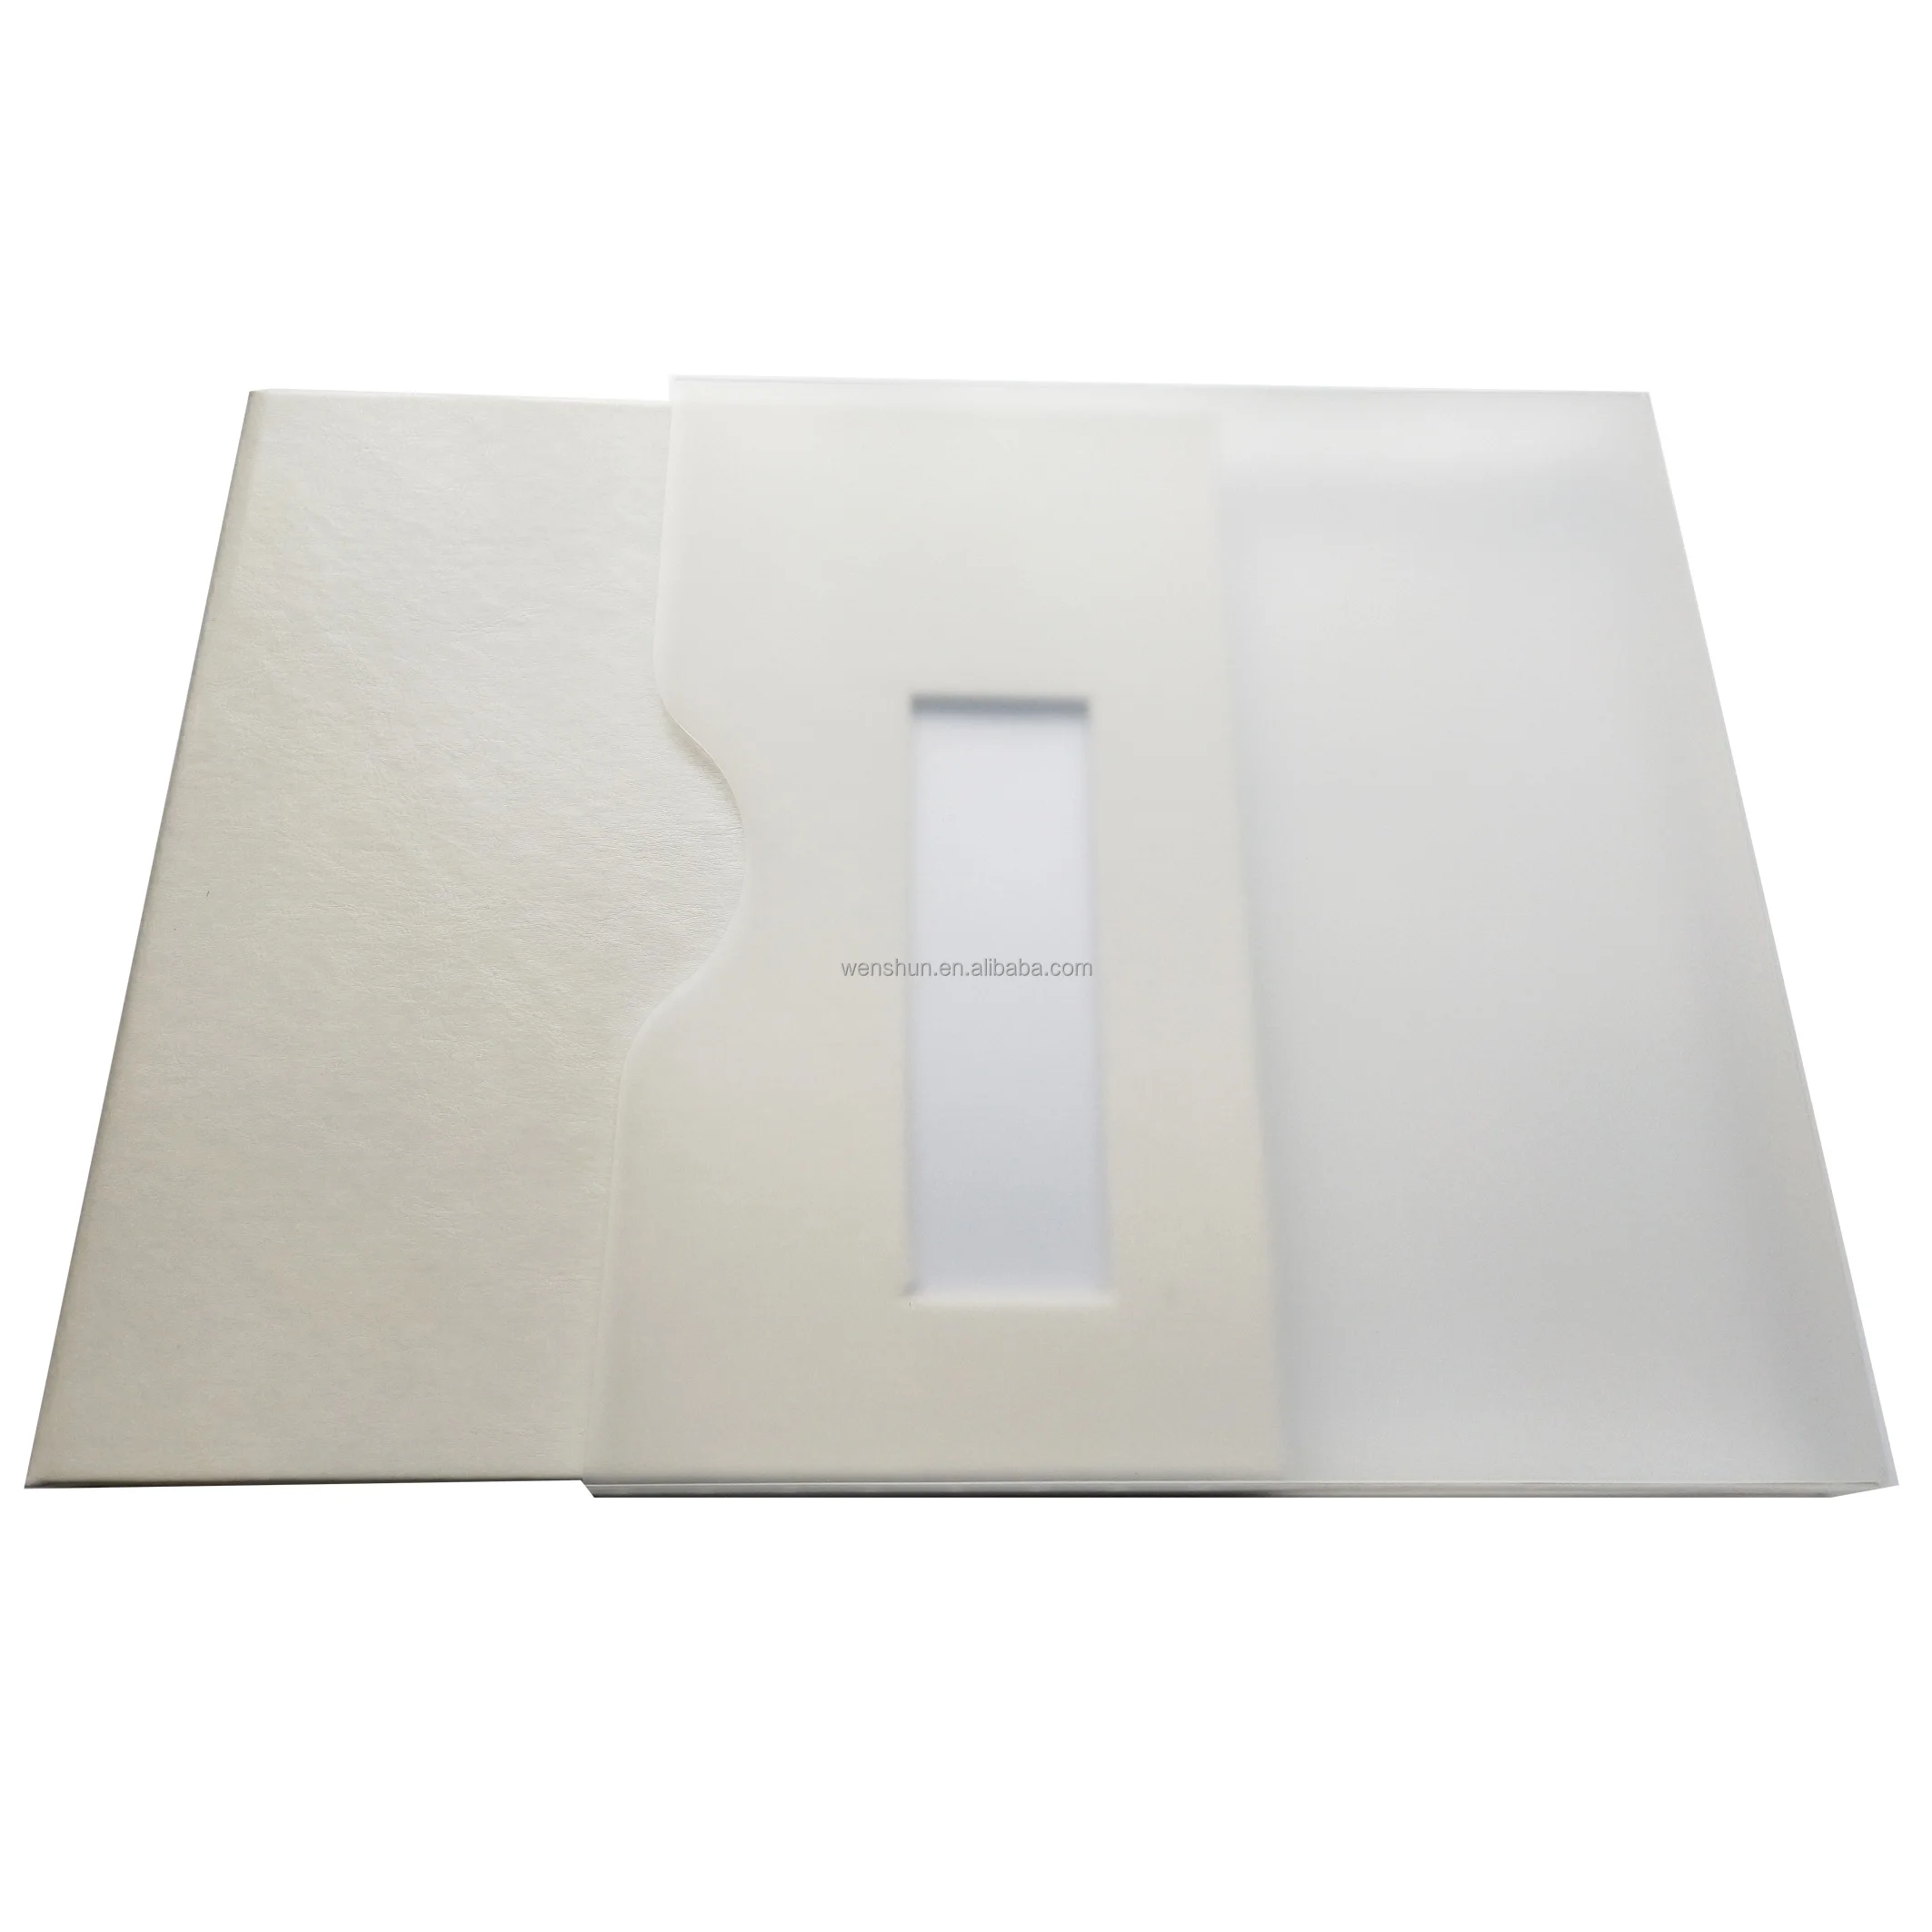 High Quality Luxury Black Paper scrapbook Photo Album with Gift Box